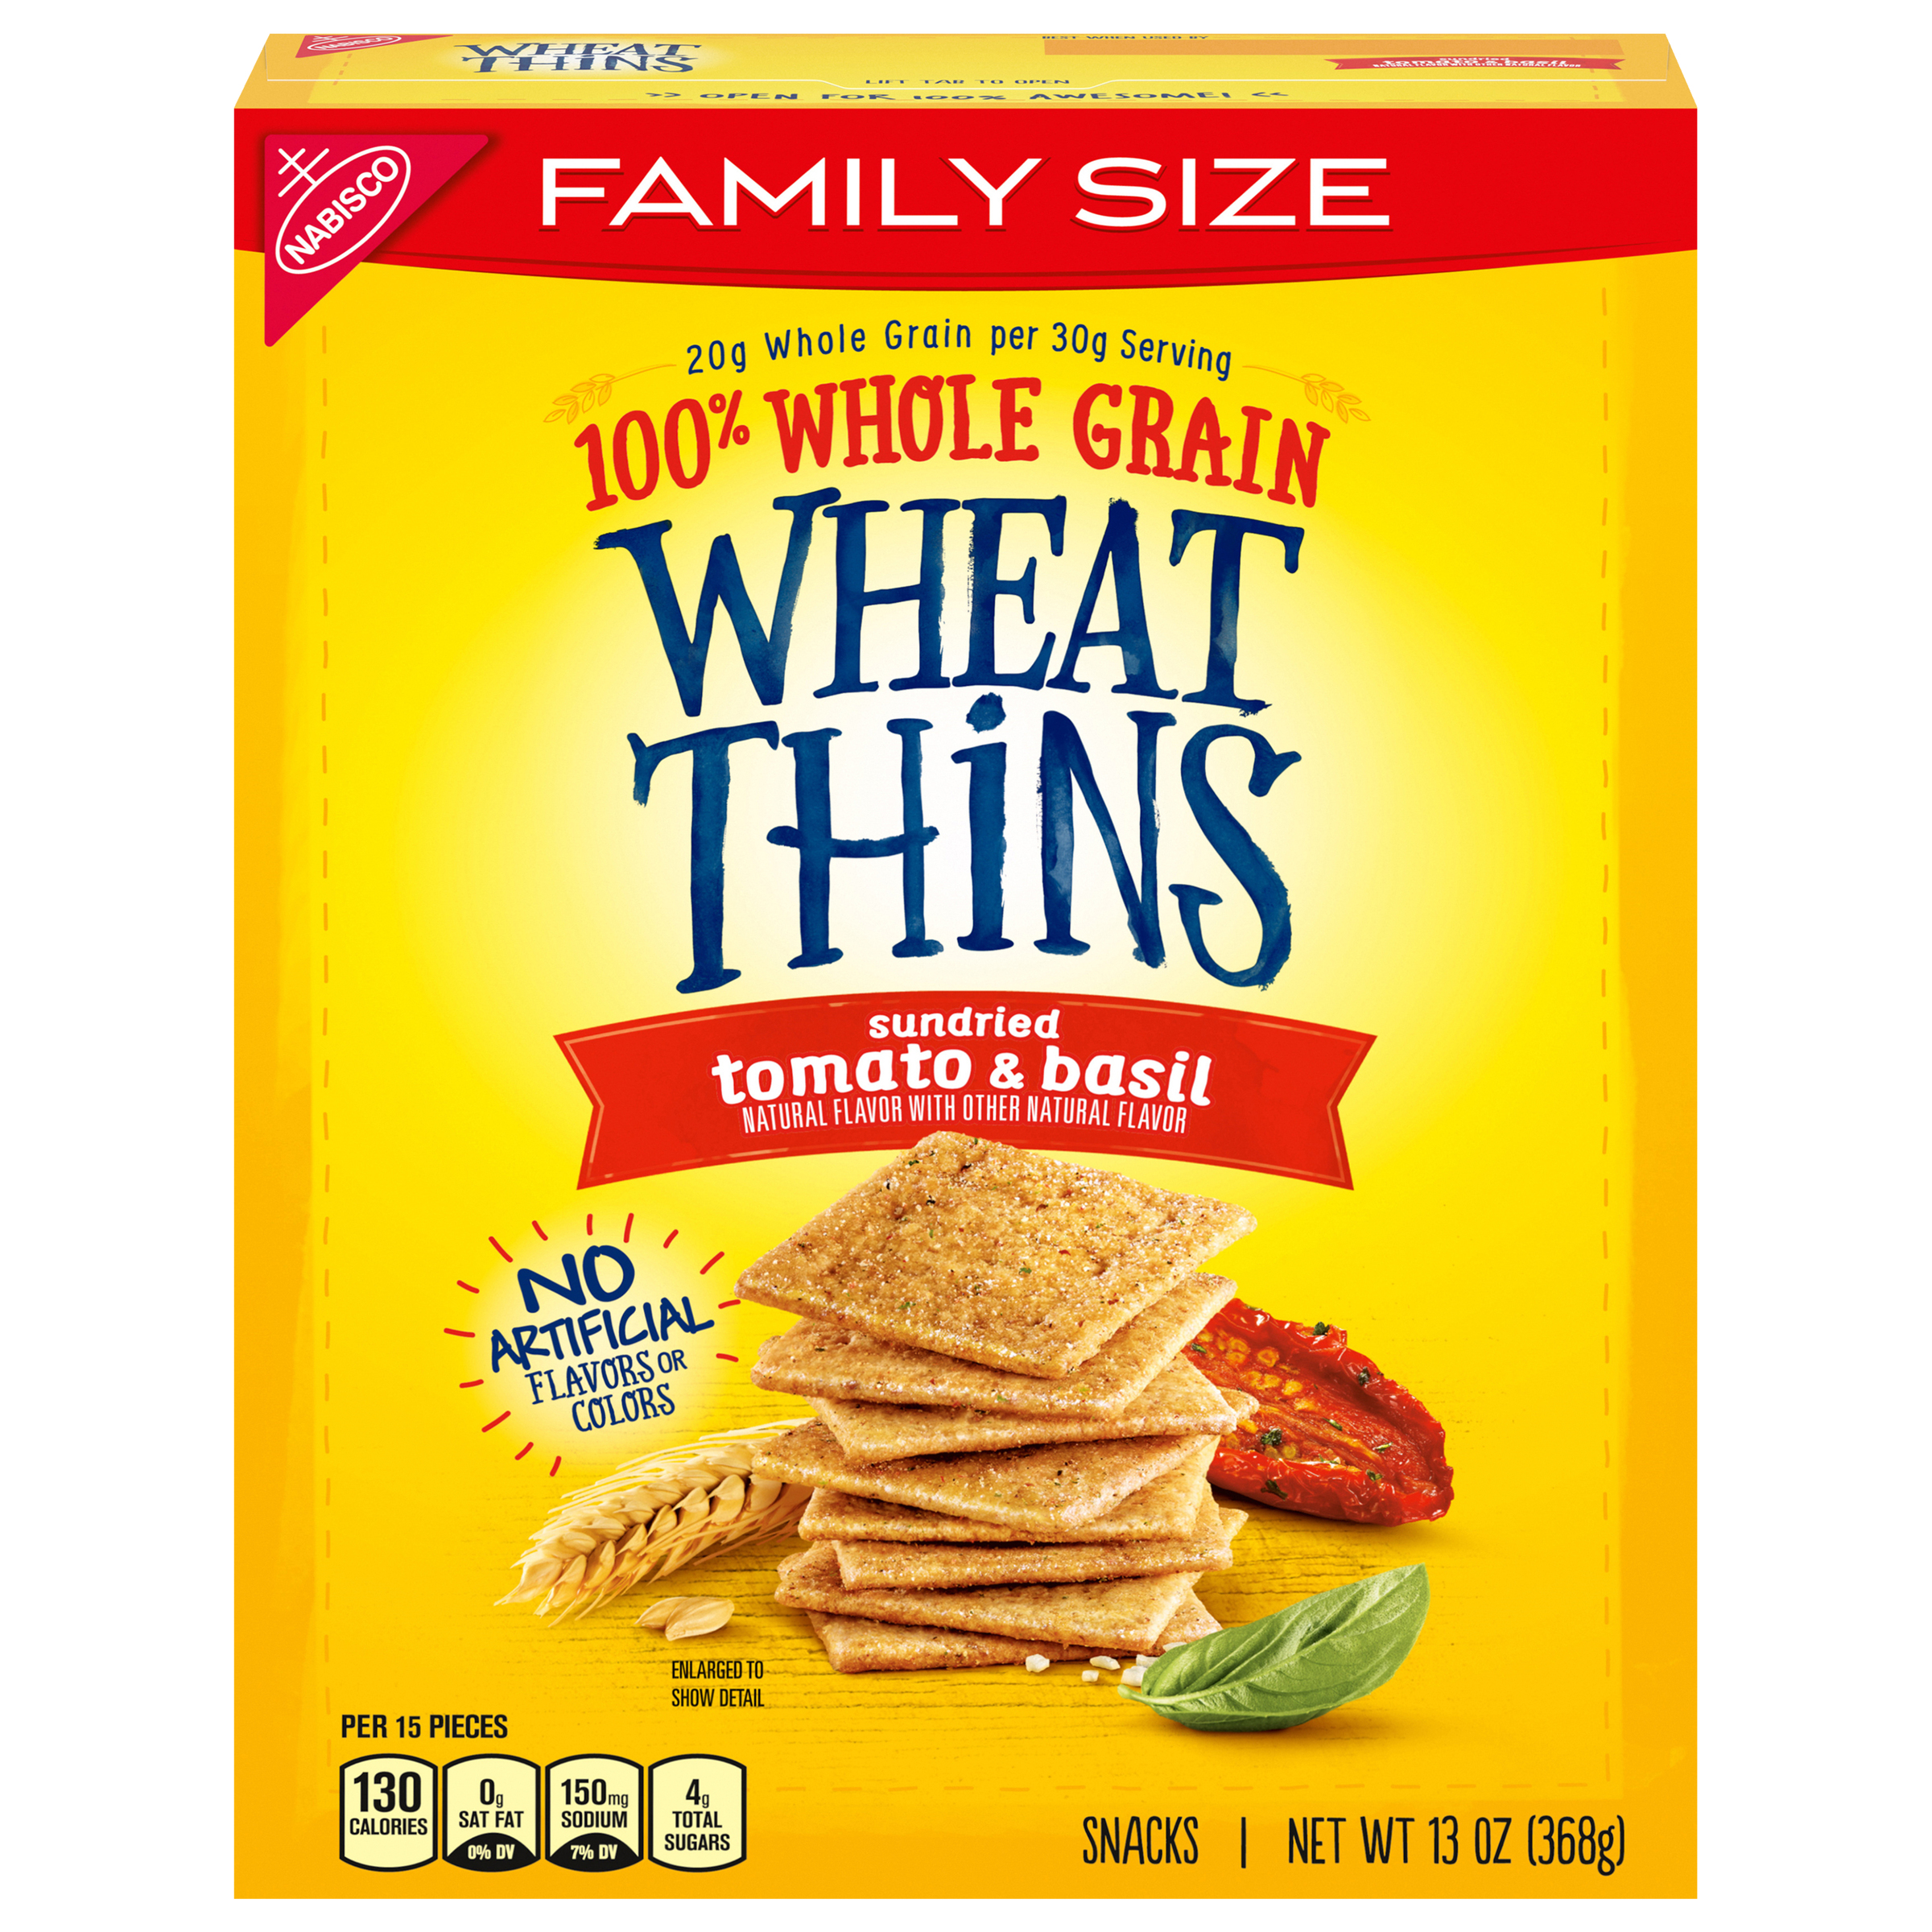 Wheat Thins Sundried Tomato & Basil Whole Grain Wheat Crackers, Family Size, 13 oz